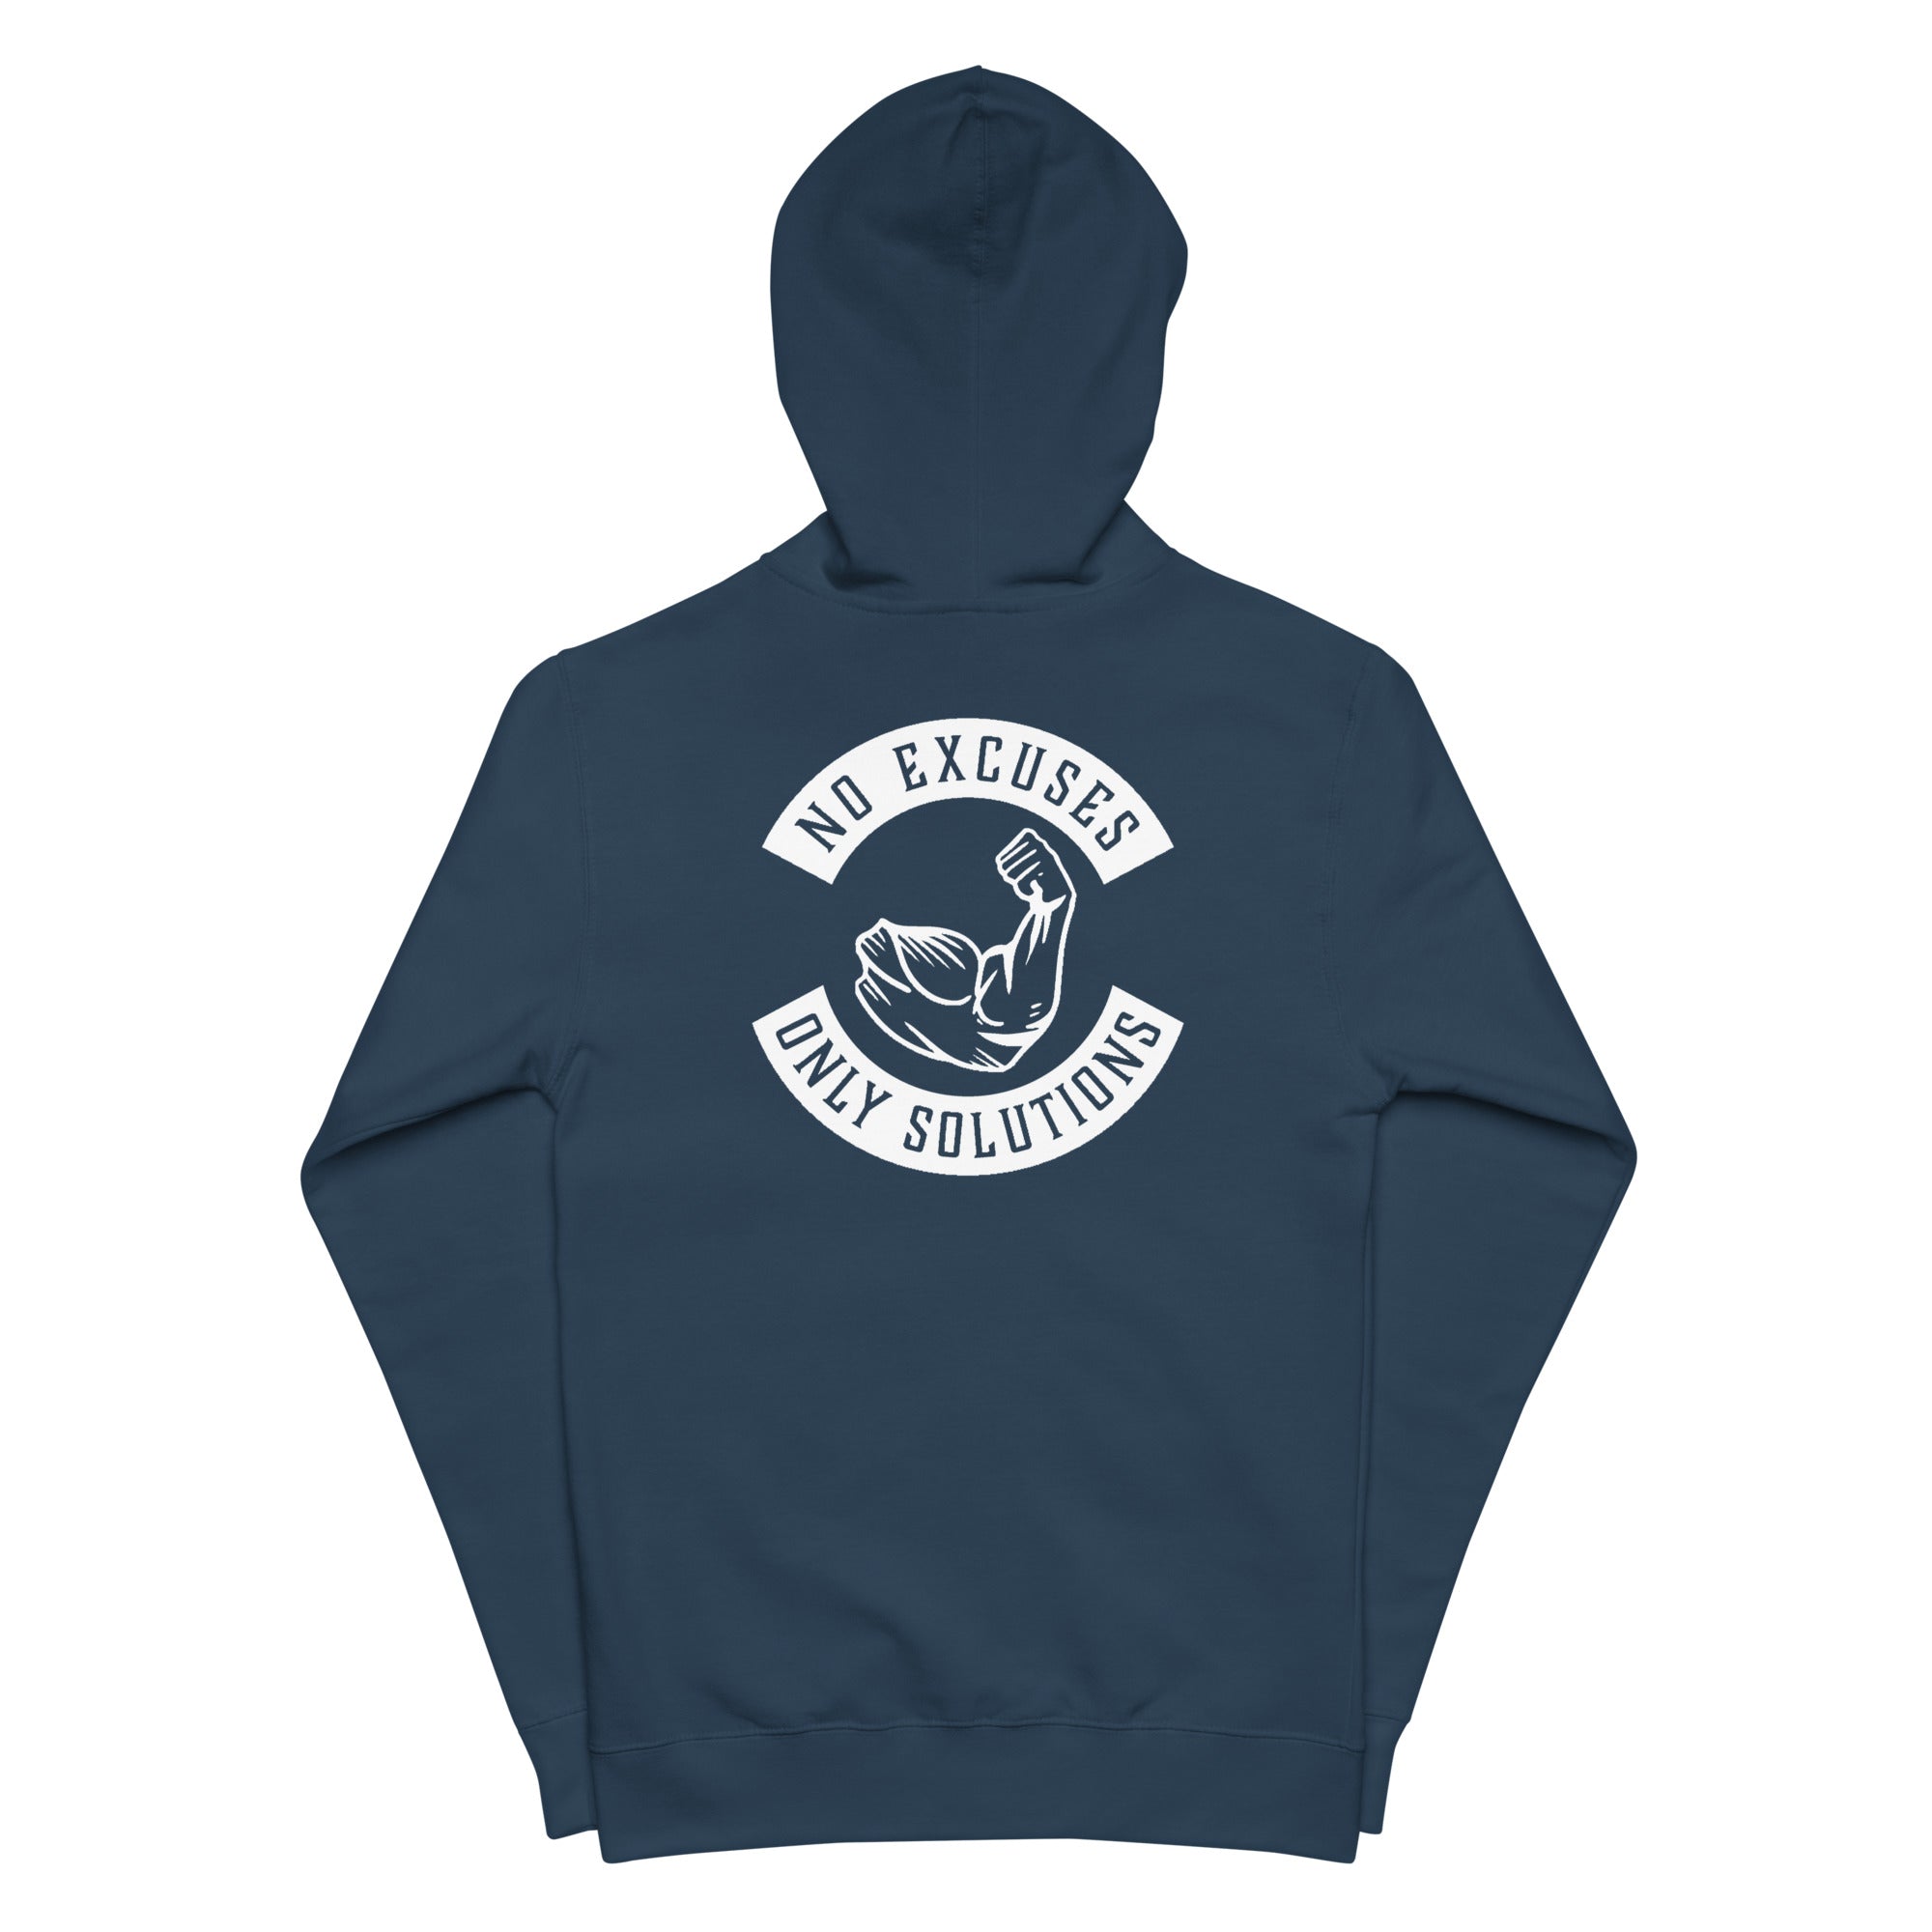 "Stitched Front, No Excuses Back" Unisex fleece zip up hoodie